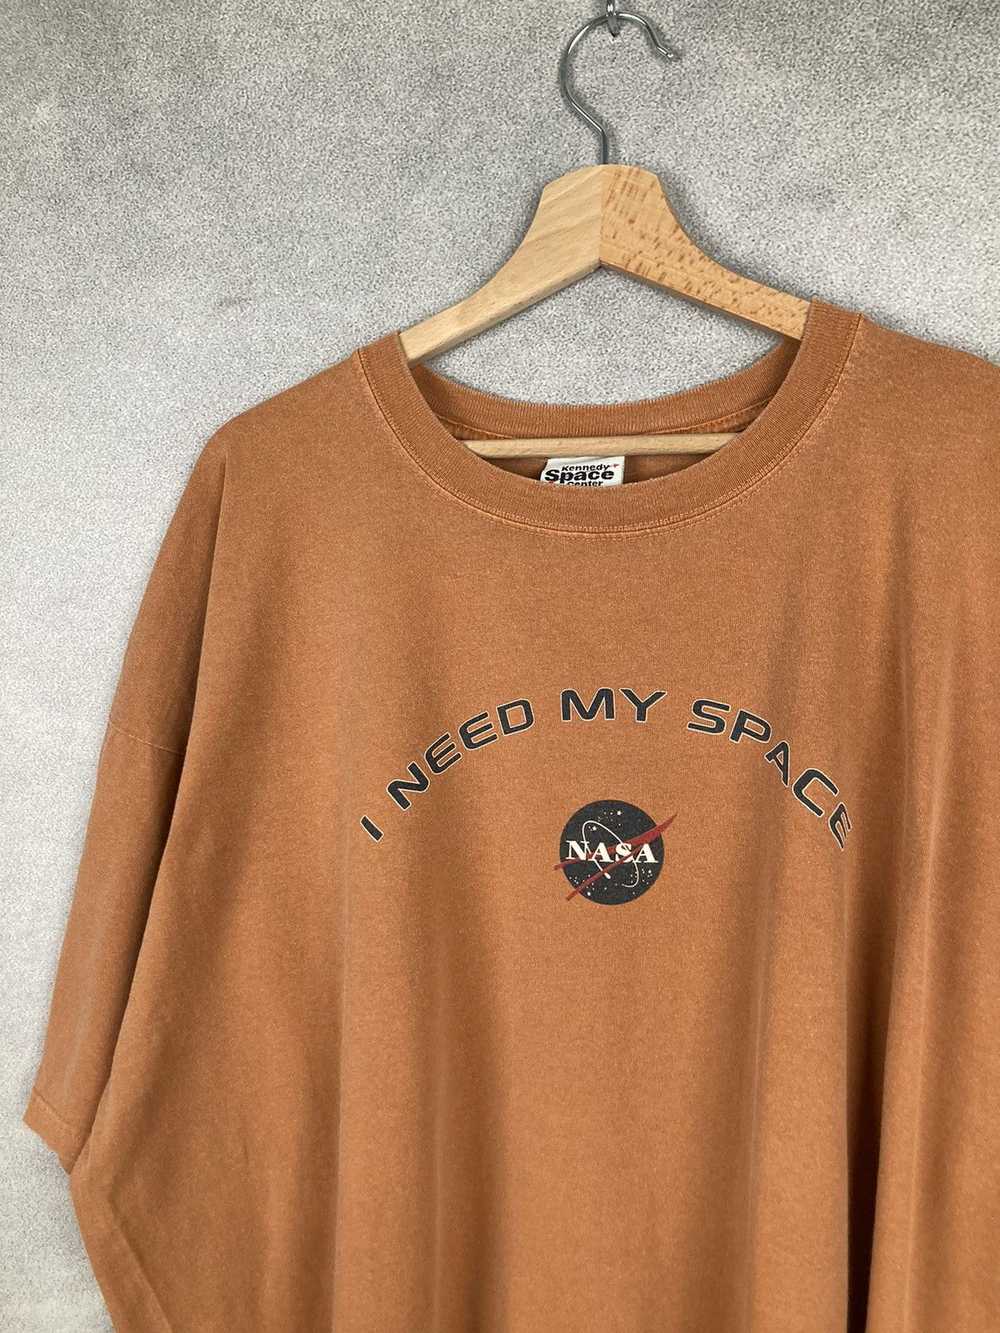 Nasa × Vintage Vintage NASA I Need My Space 90s K… - image 3